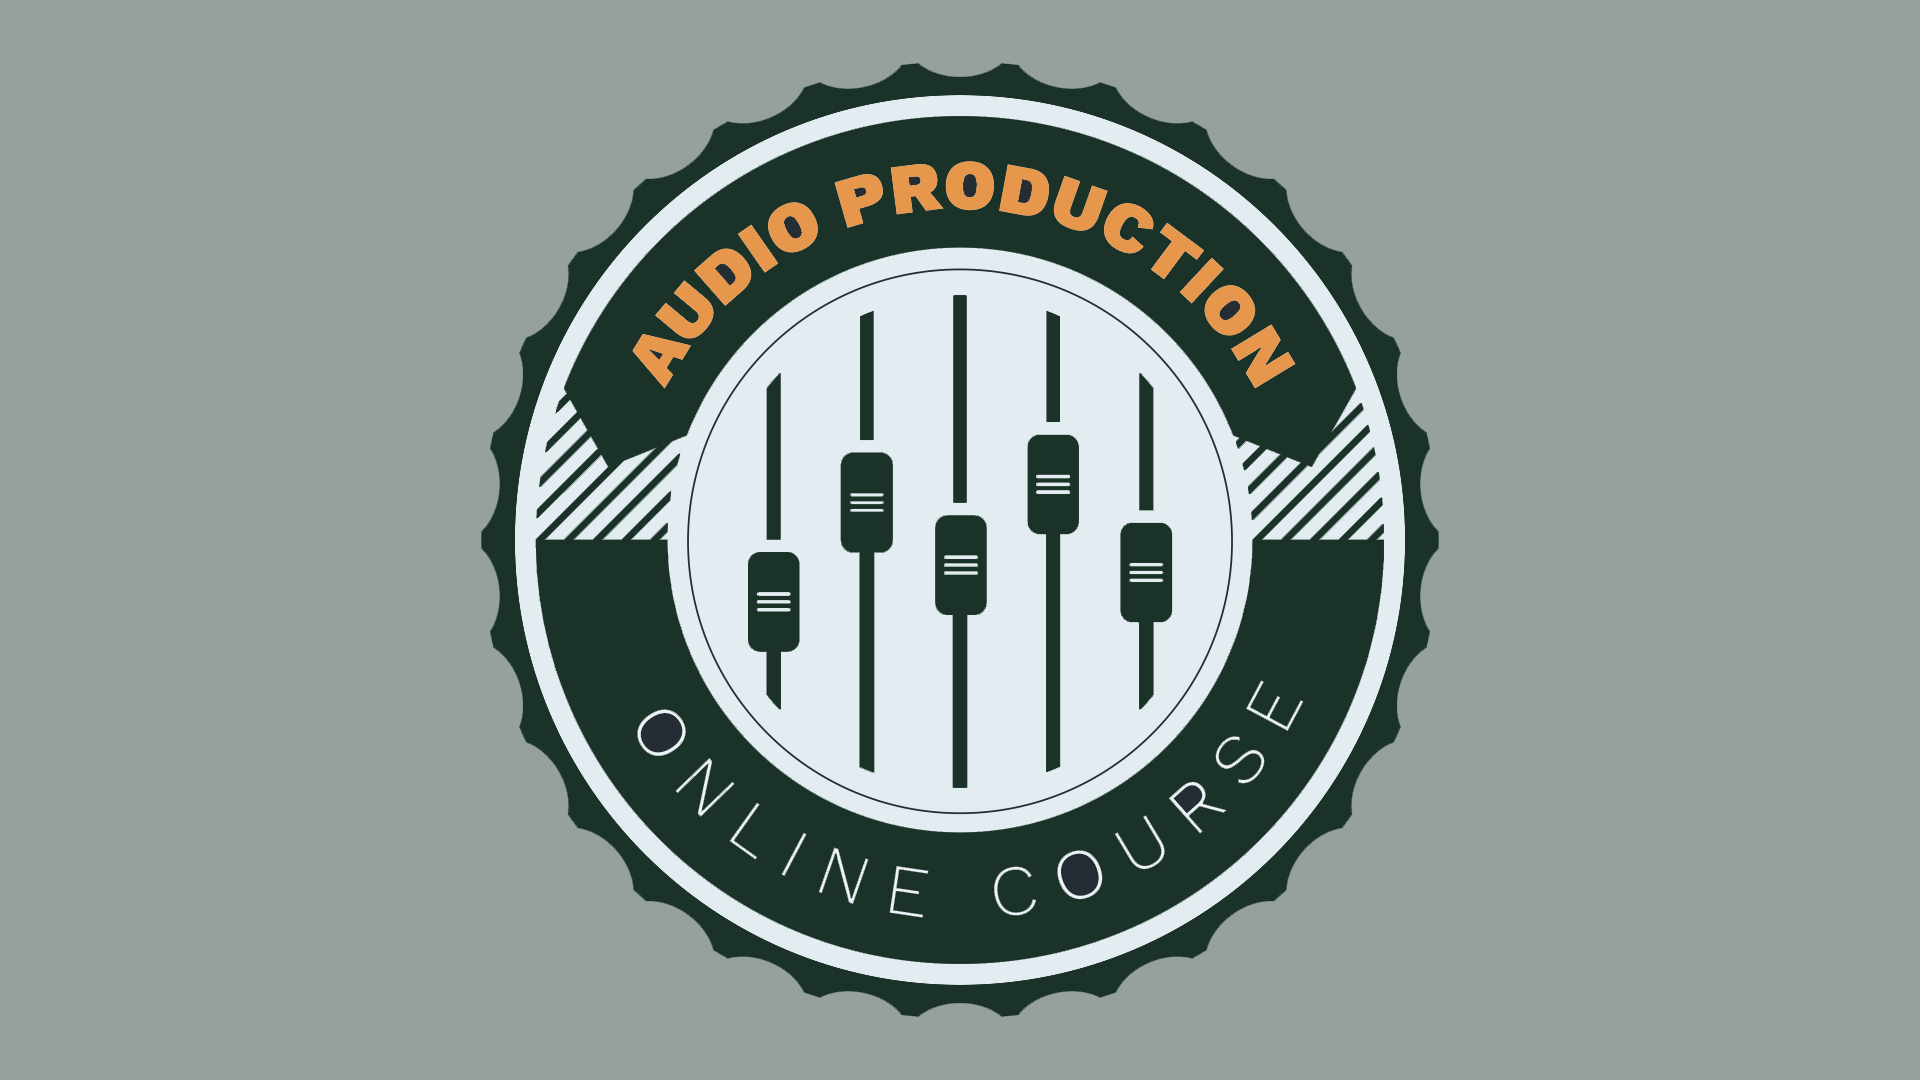 Music Radio Creative - Audio Production Course1